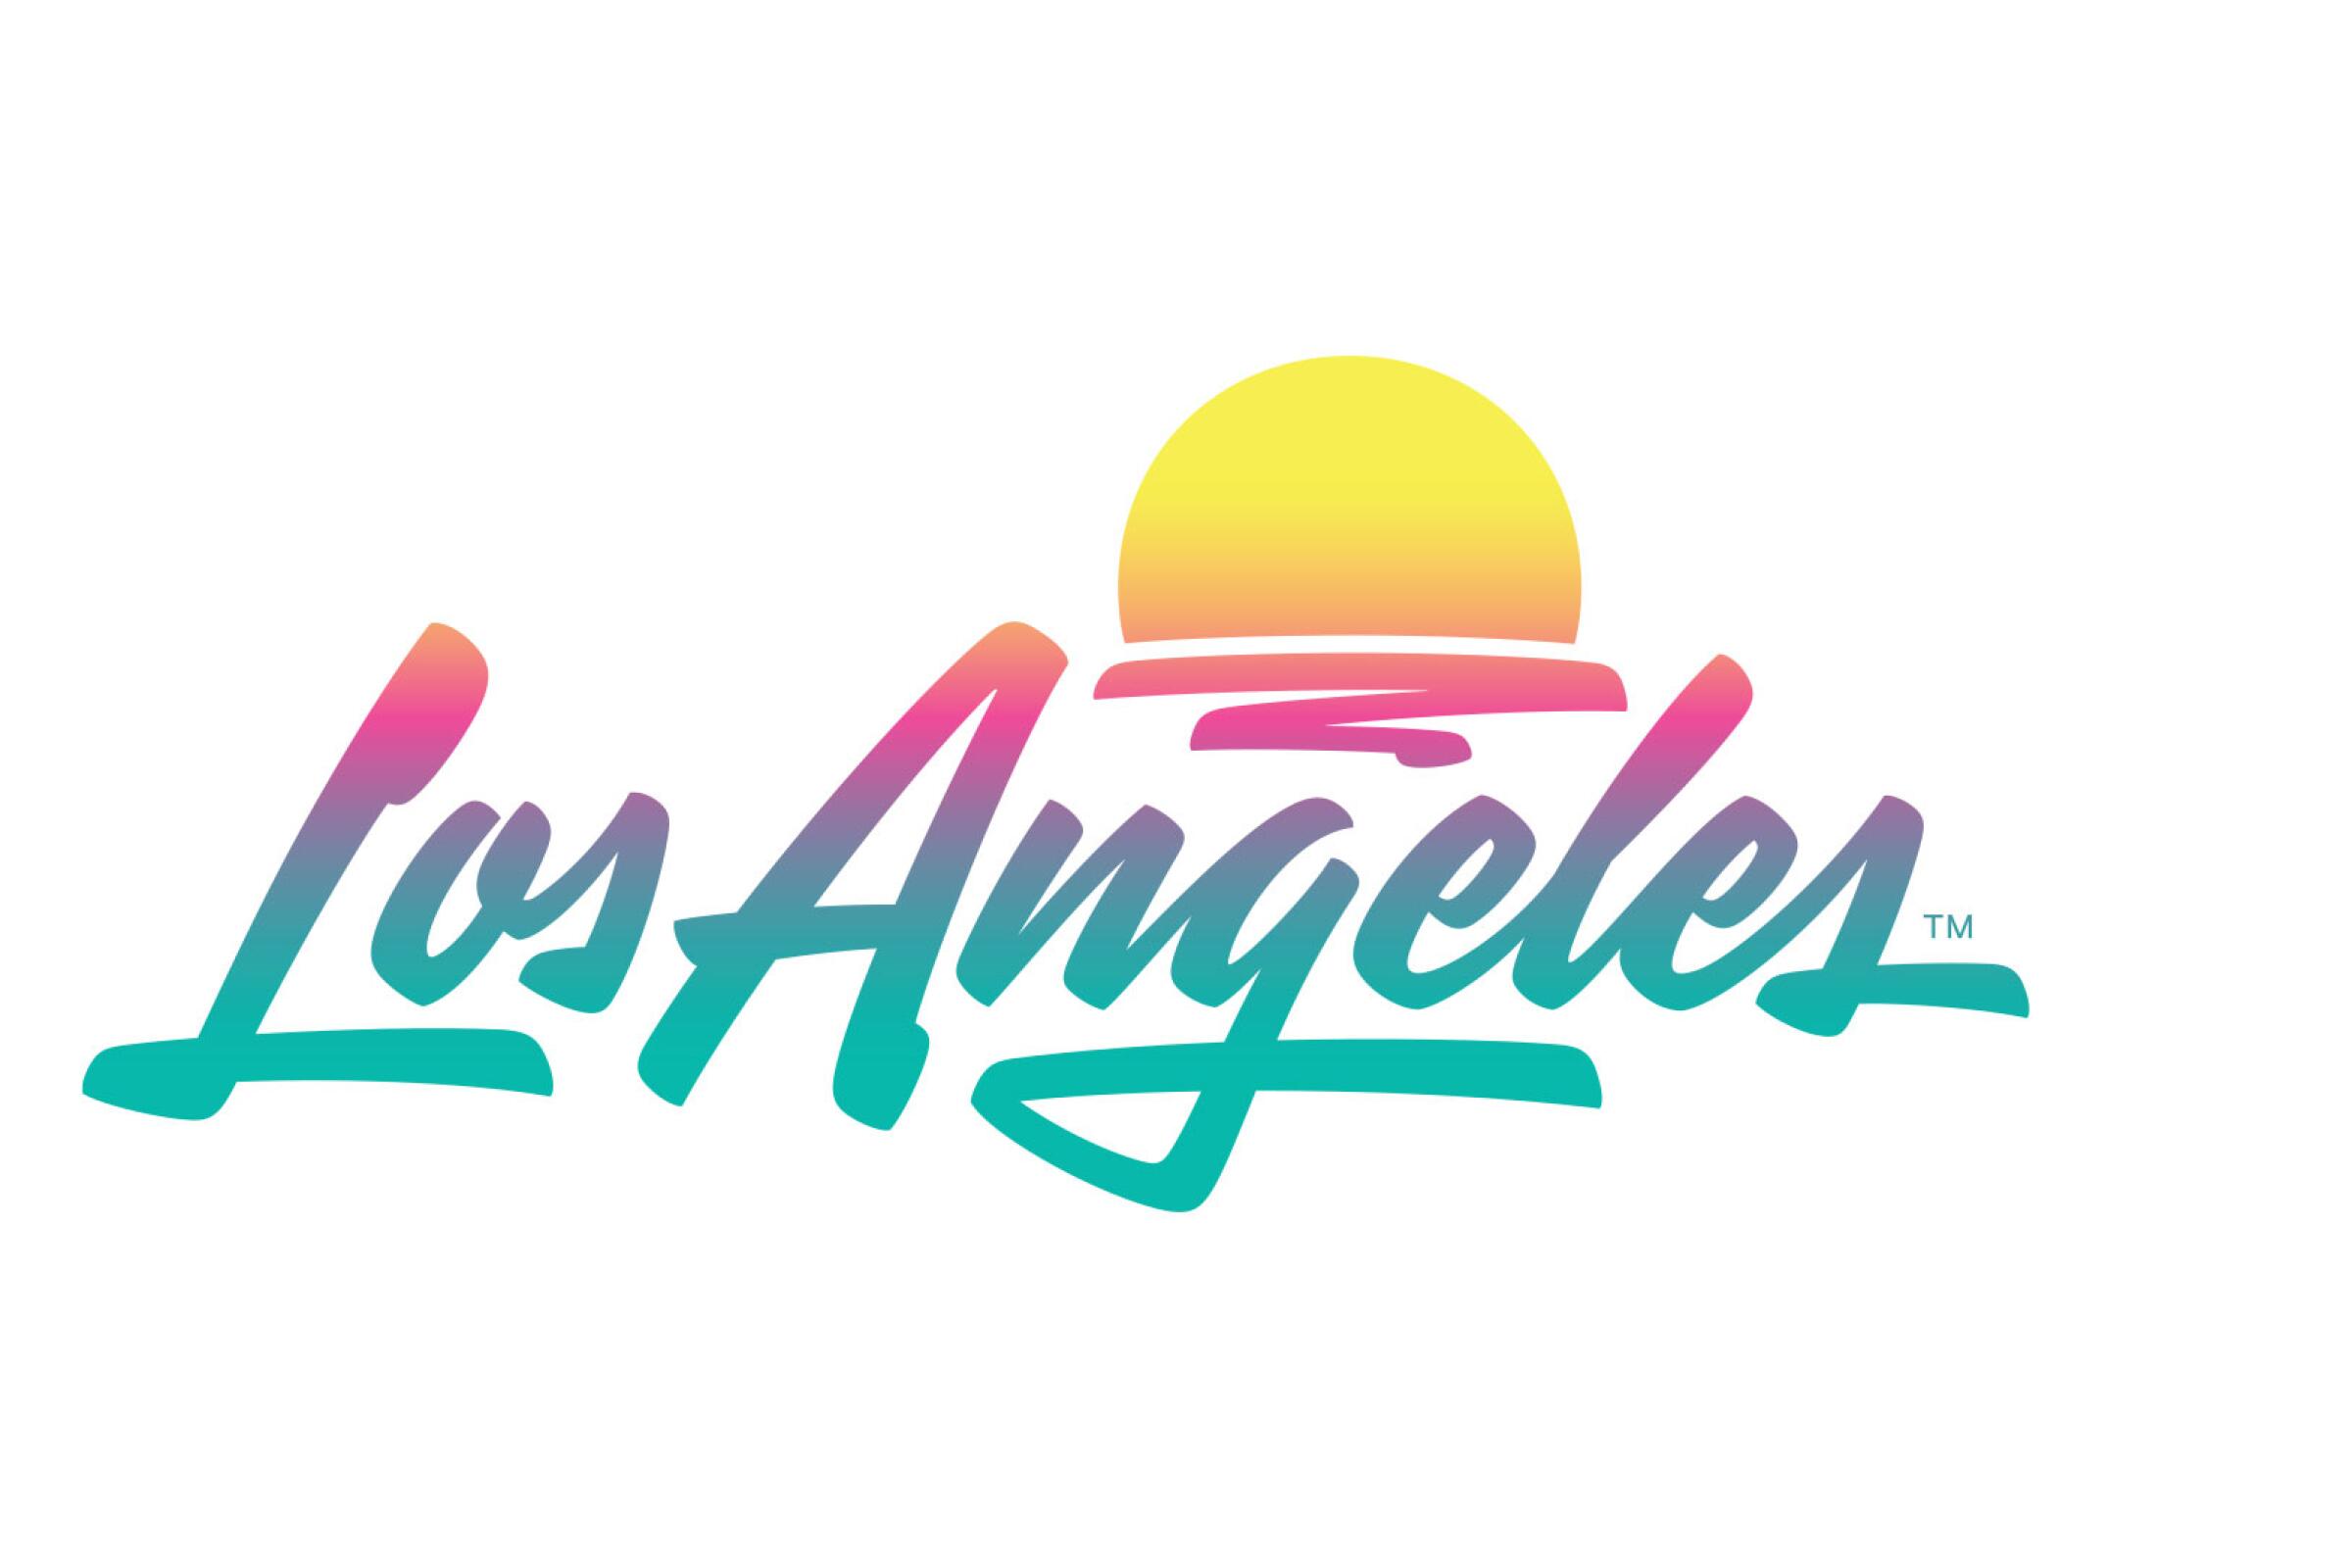 Los Angeles Brush Script  Typography logo inspiration, Lettering